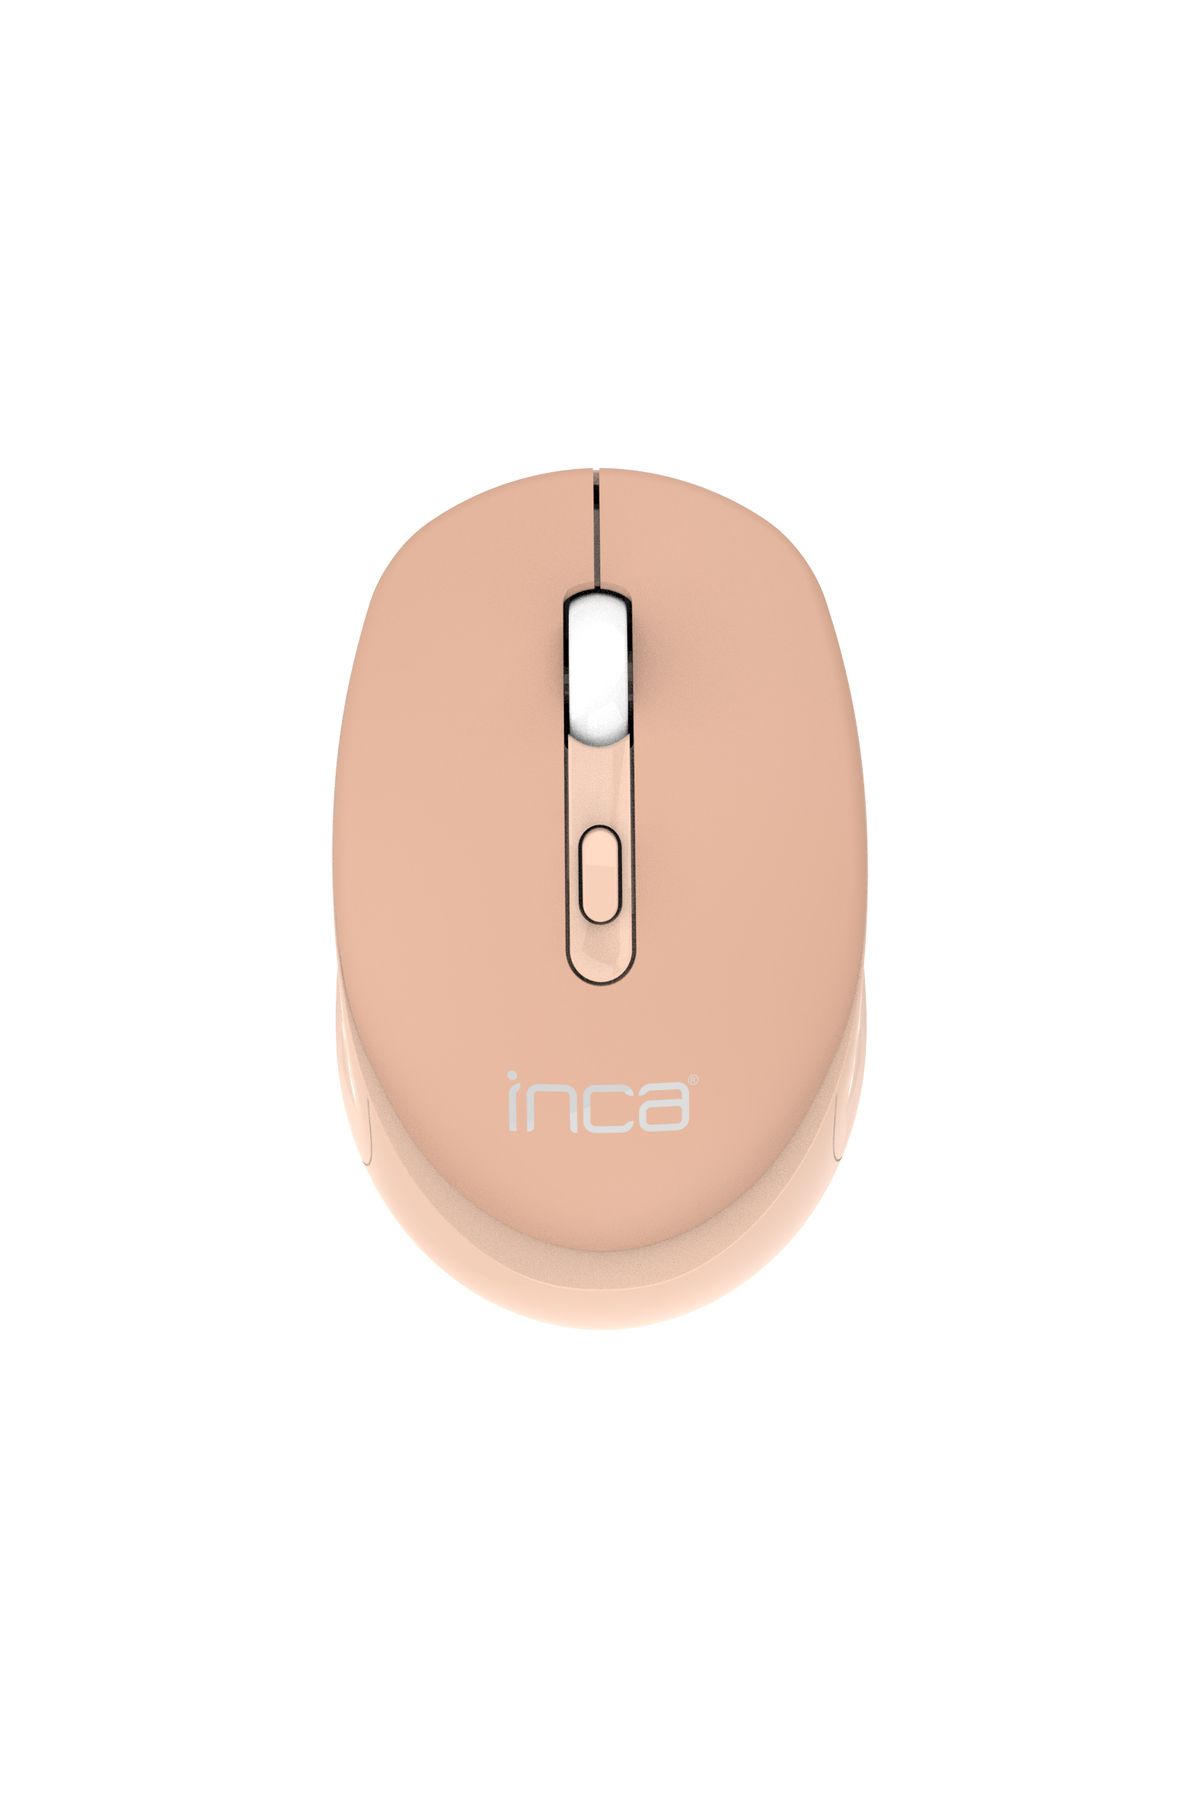 Inca IWM-243R Candy Desing  4D Silent Wireless Mouse